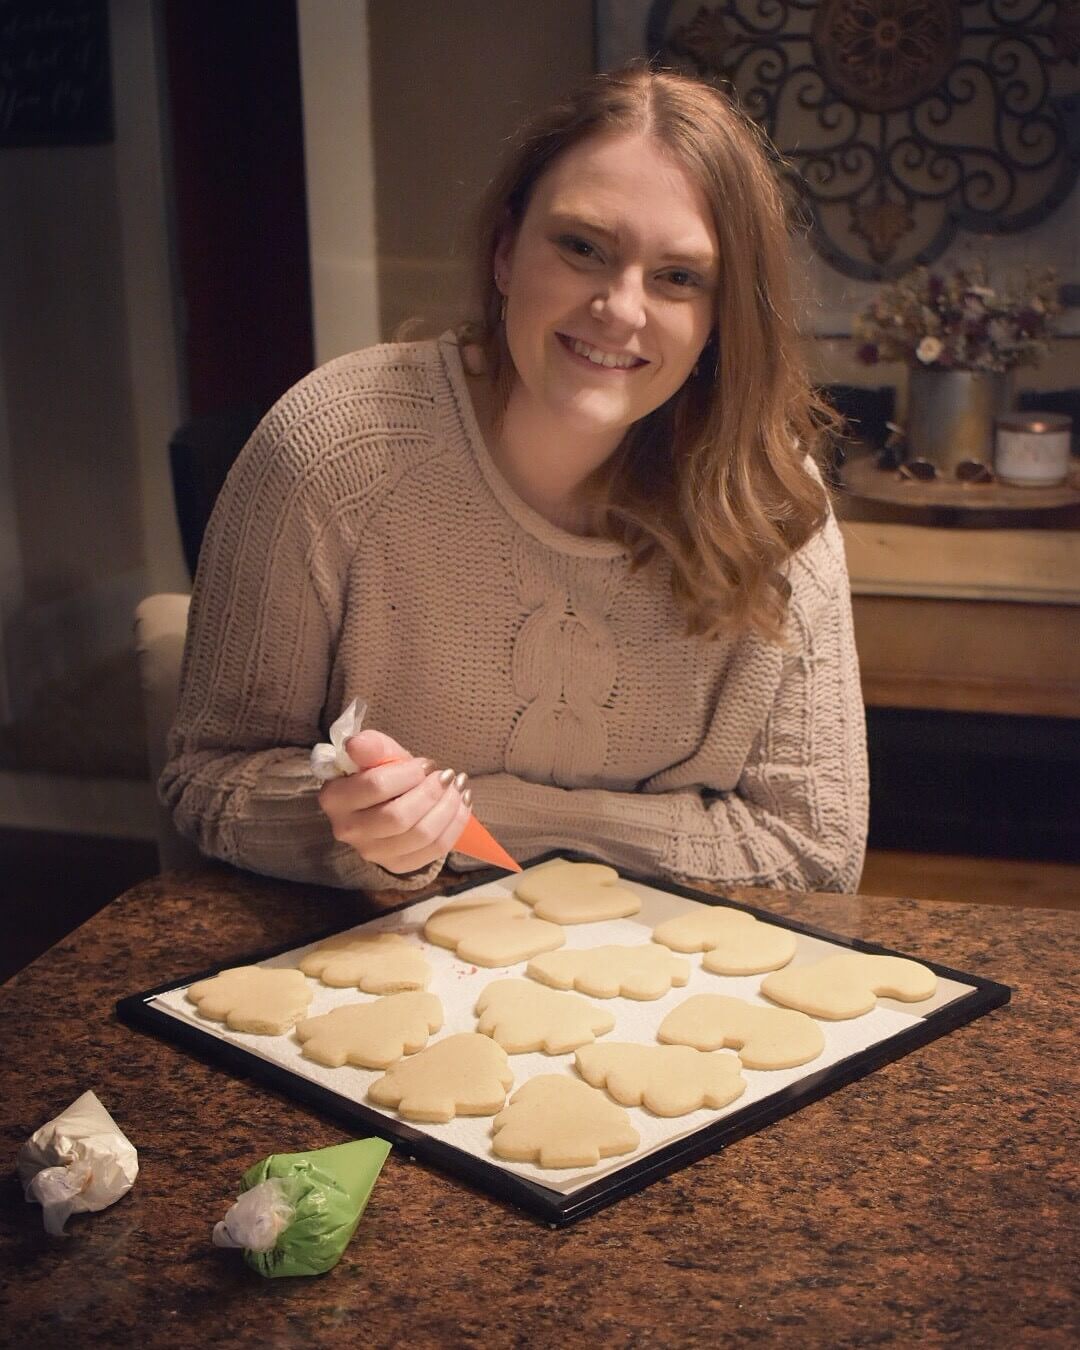 Olivia Luse decorating cookies